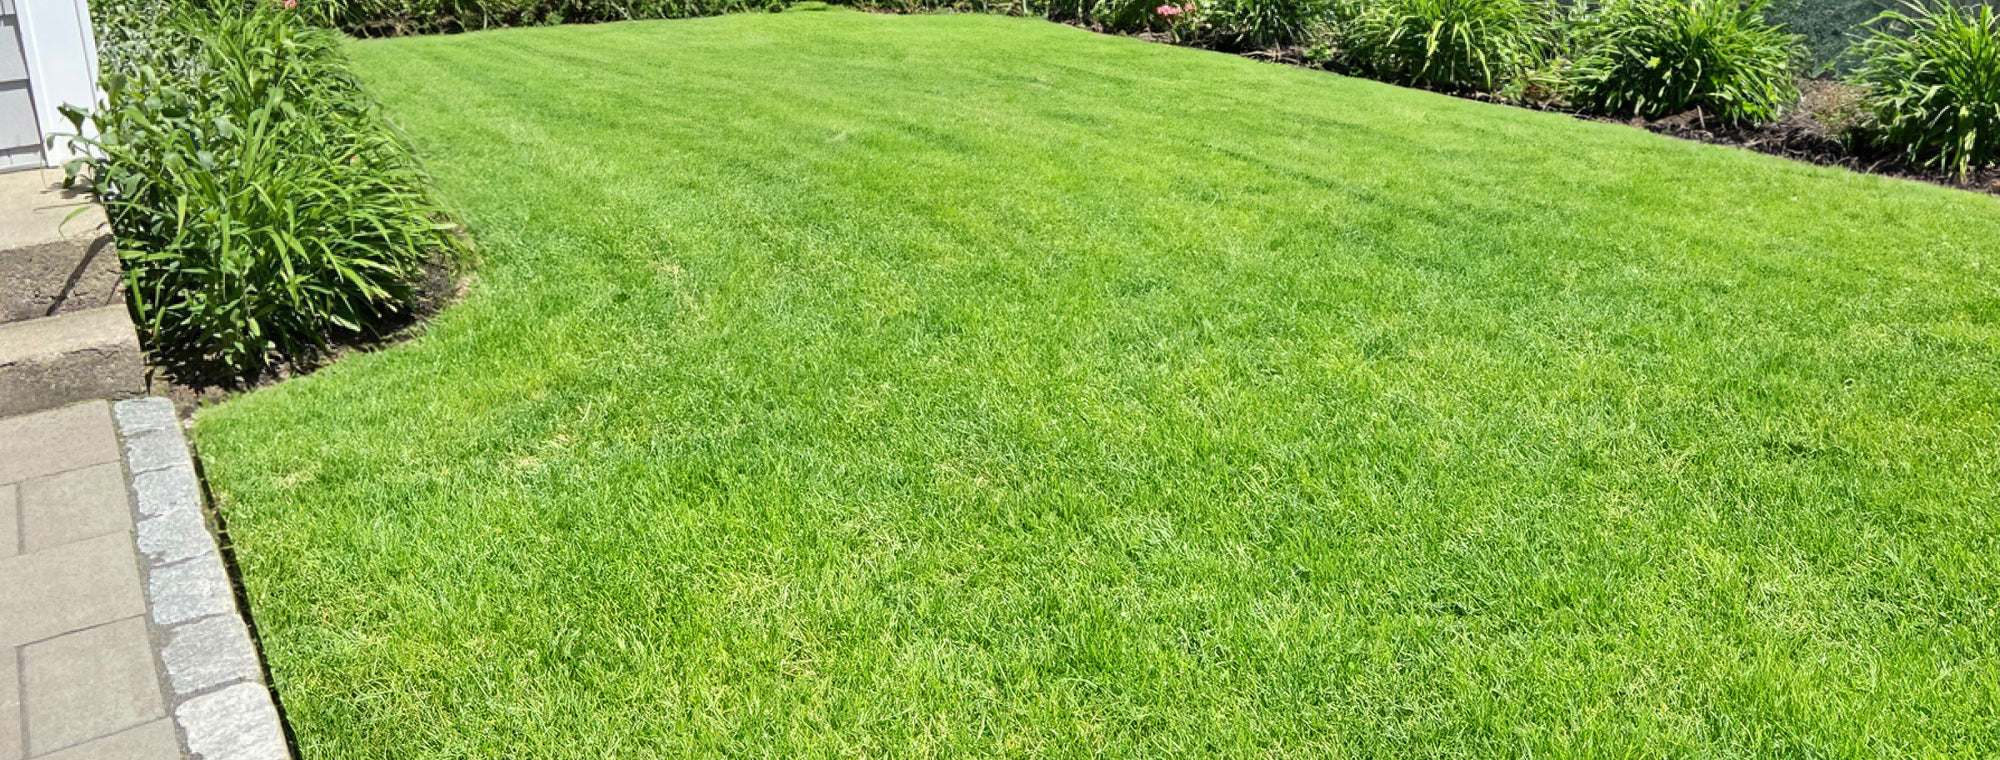 green lawn before being mowed